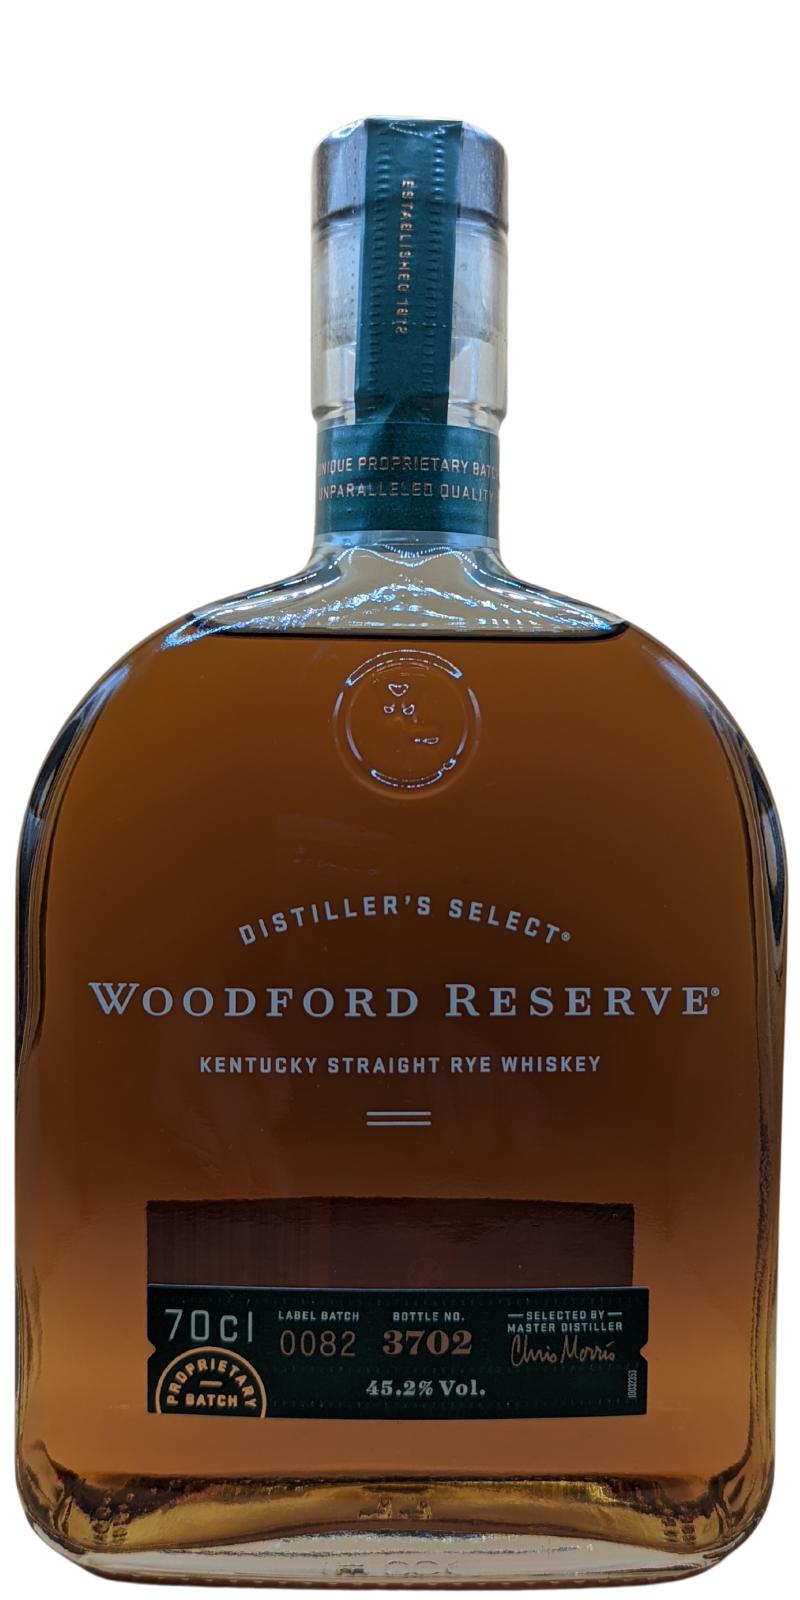 Woodford Reserve Distiller's Select Kentucky Straight Rye Whisky Charred New American Oak Barrels Brown-Forman Netherlands B.V 45.2% 700ml